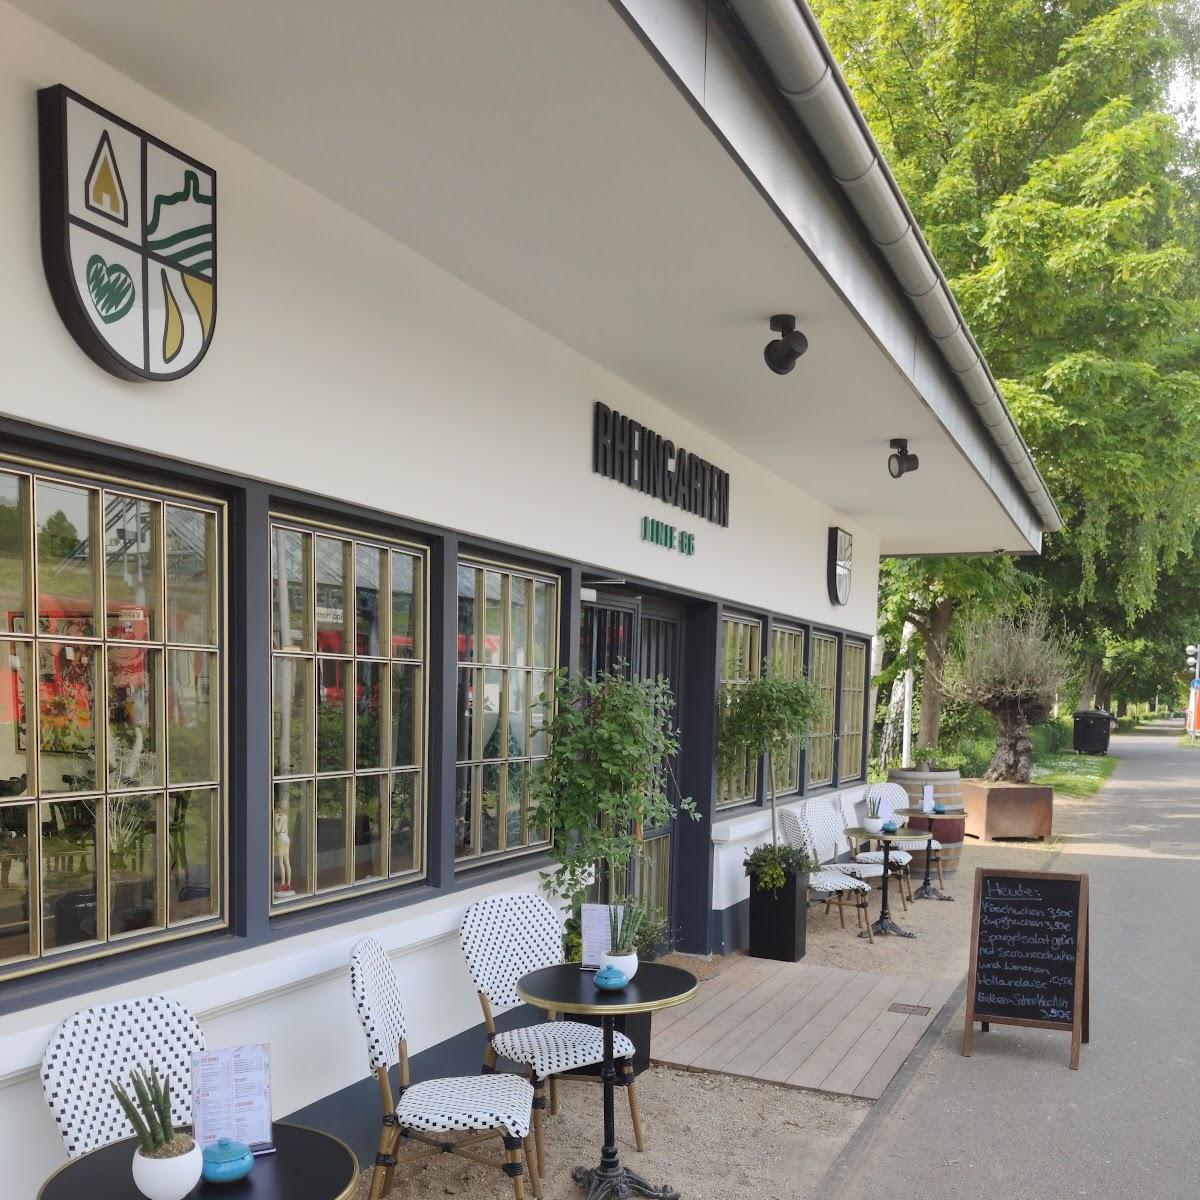 Restaurant "Rheingarten 66" in Bad Honnef